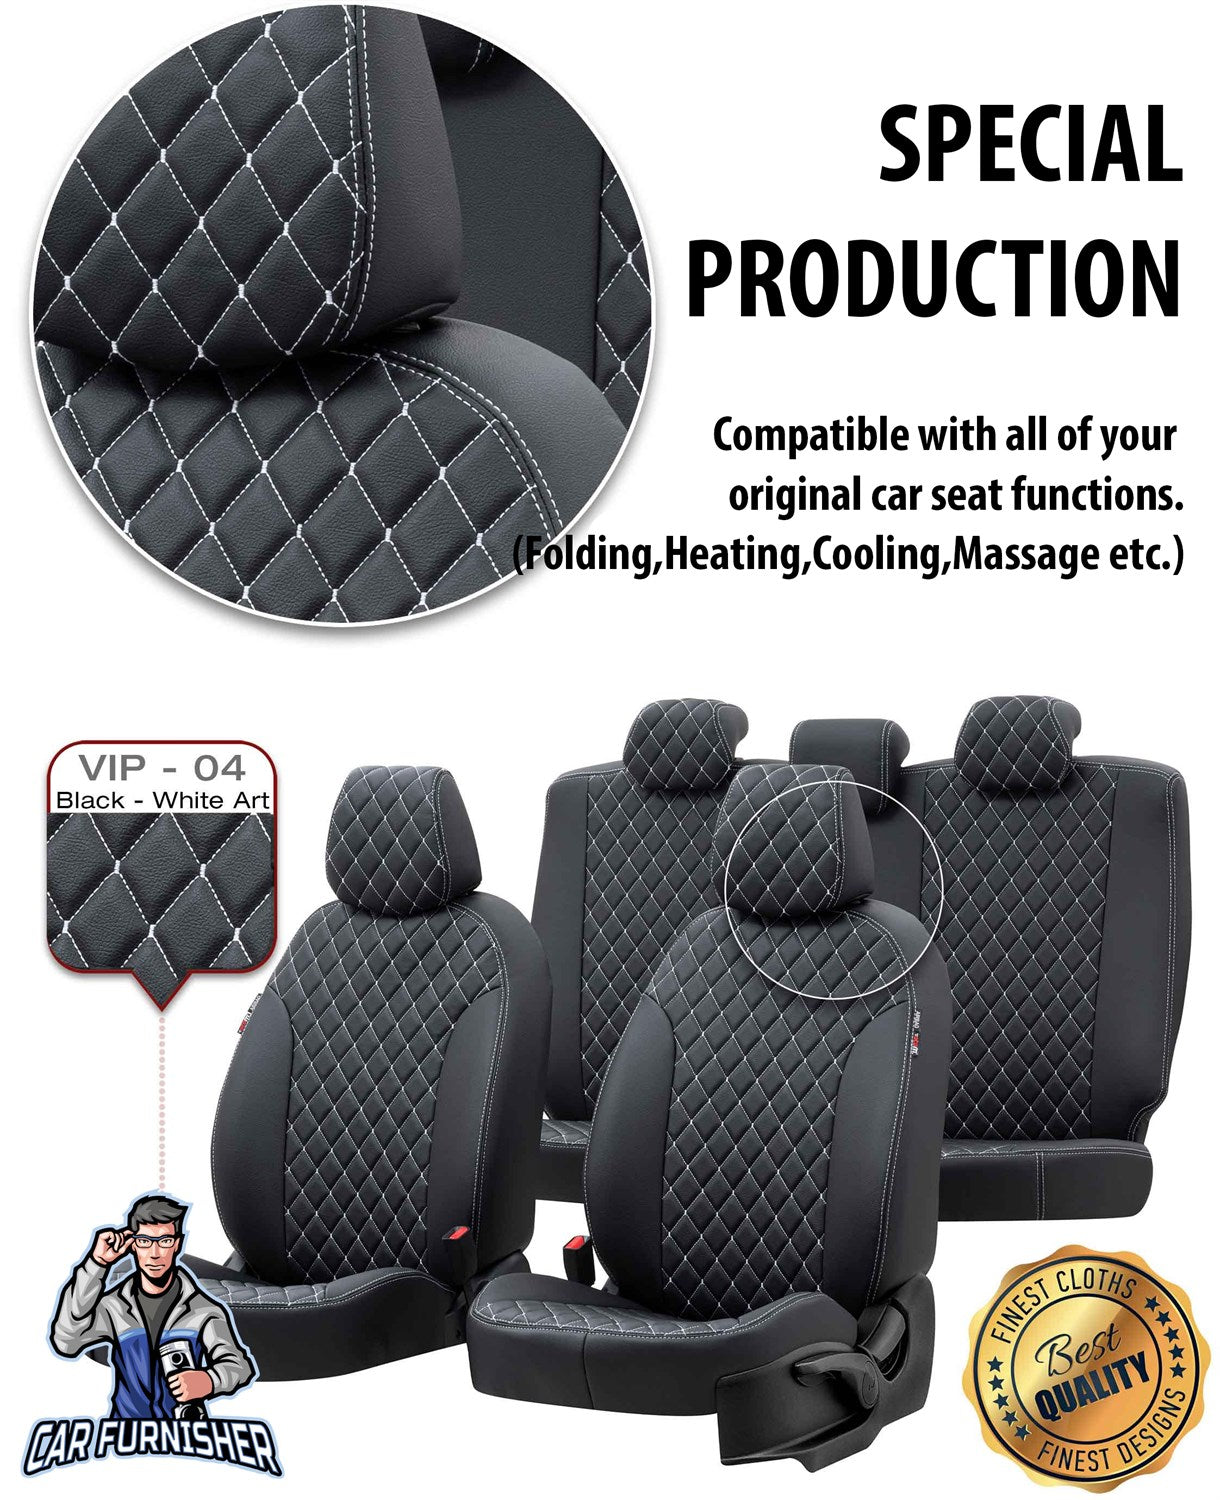 Citroen C3 Seat Covers Madrid Leather Design Dark Gray Leather